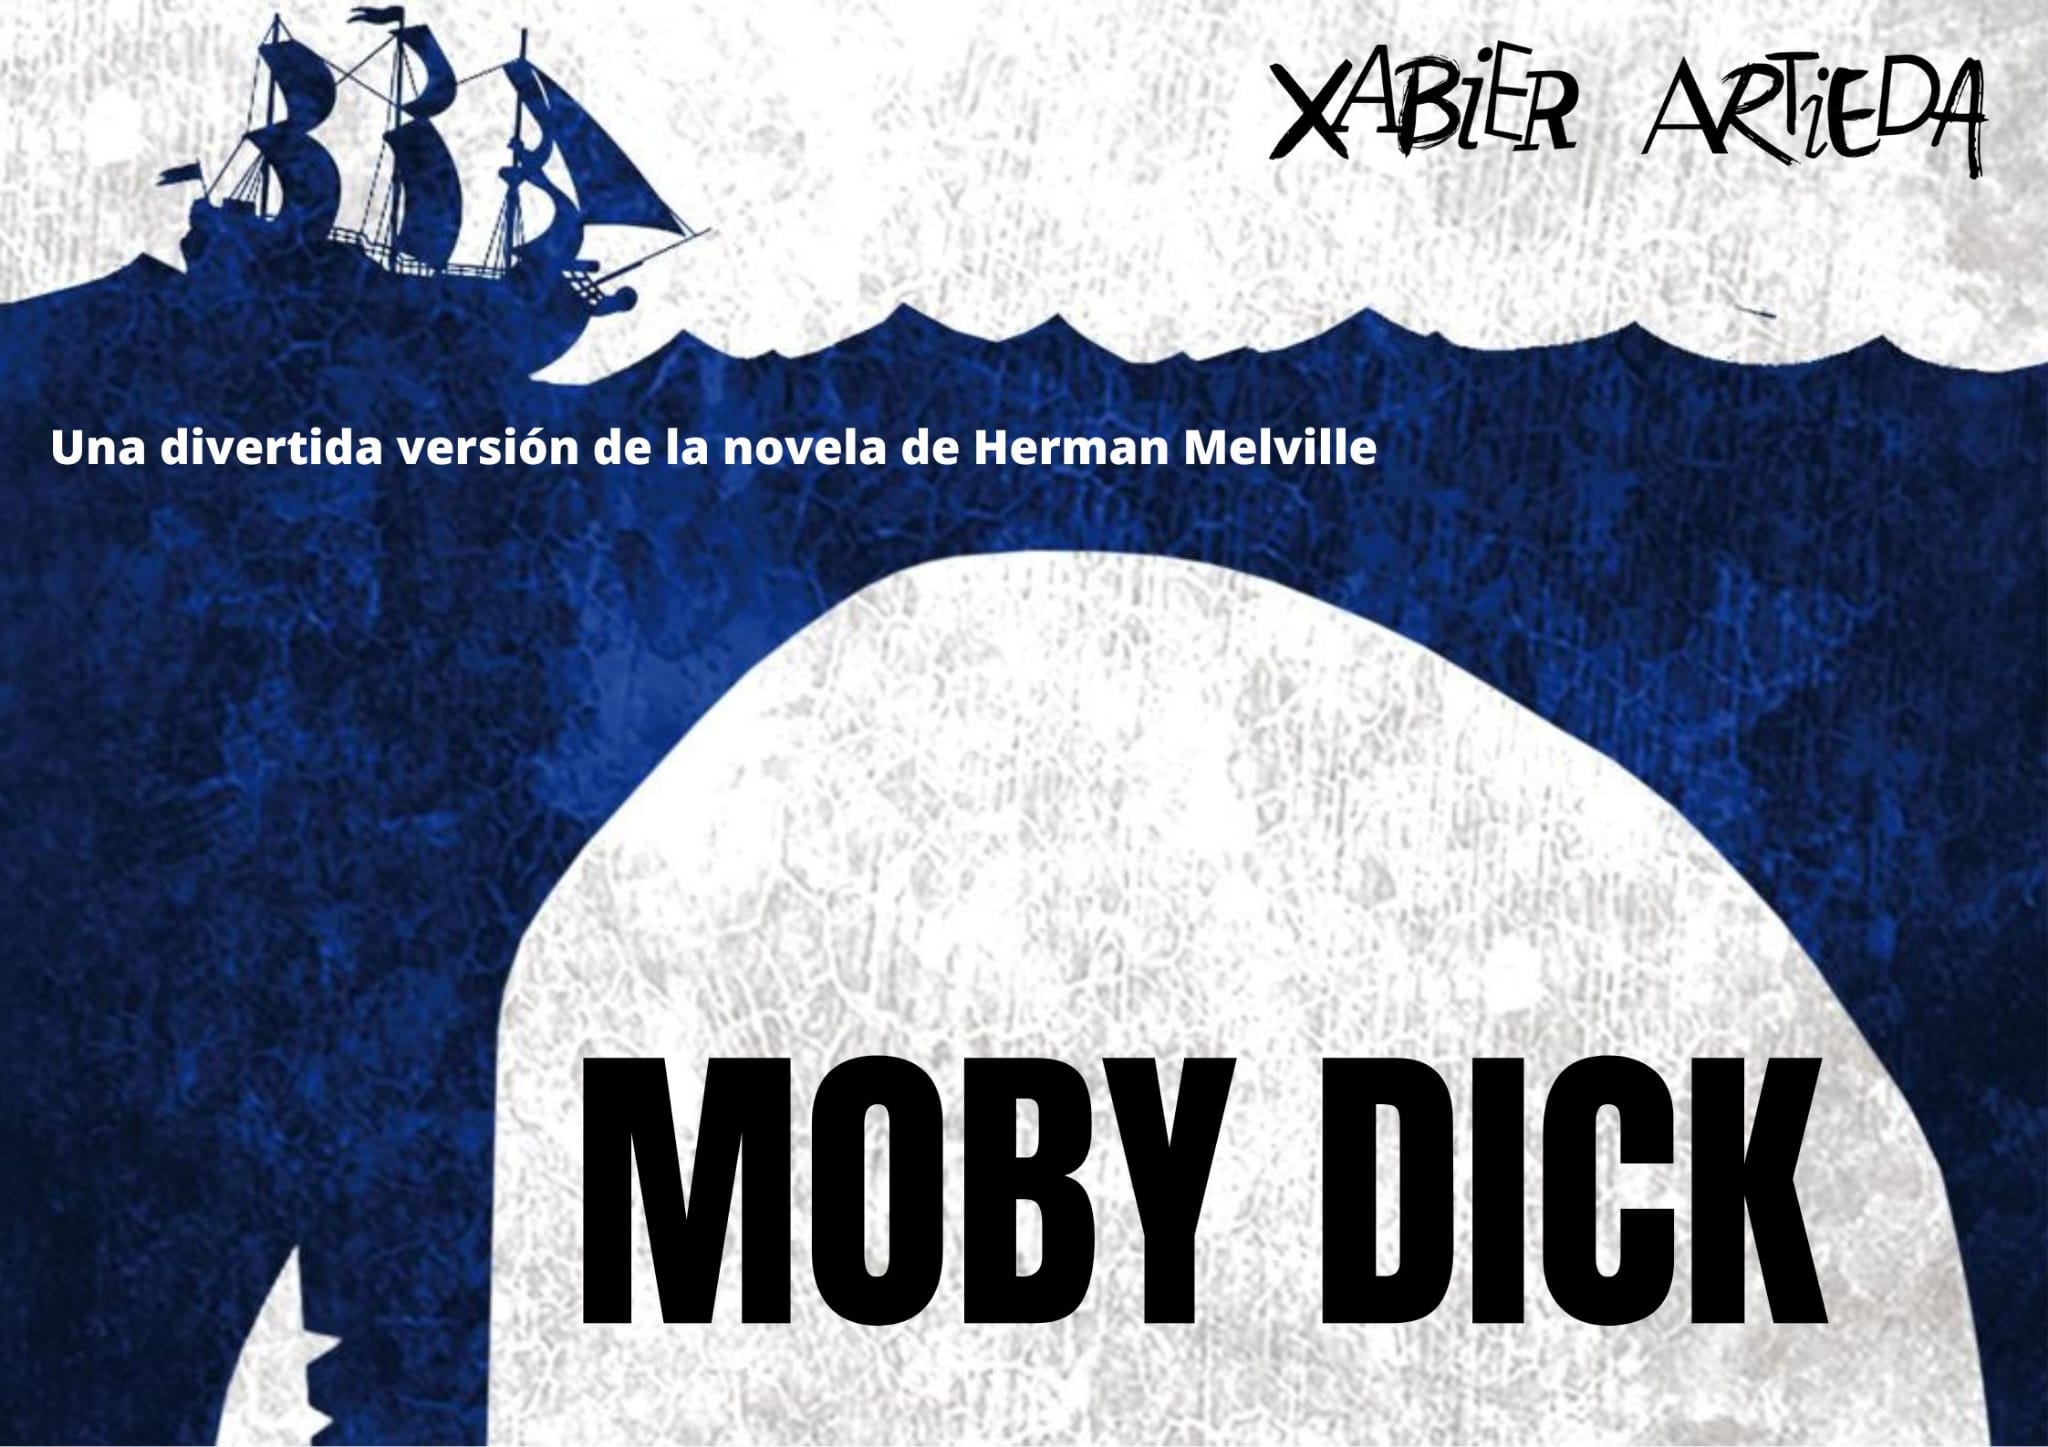 Moby Dick, Xabi Artieda